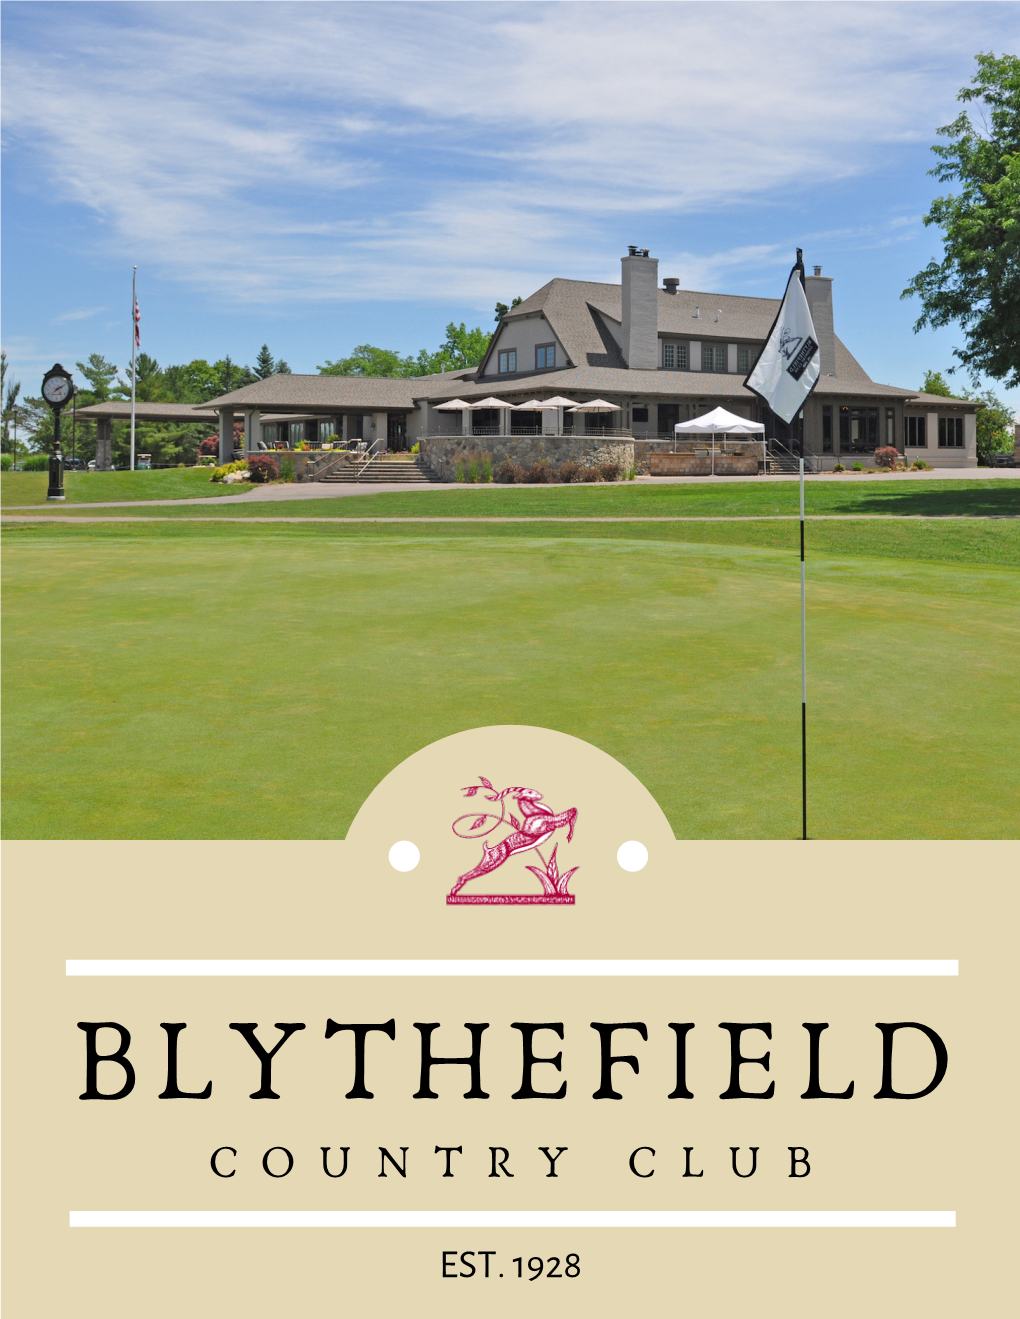 Membership at Blythefield Country Club